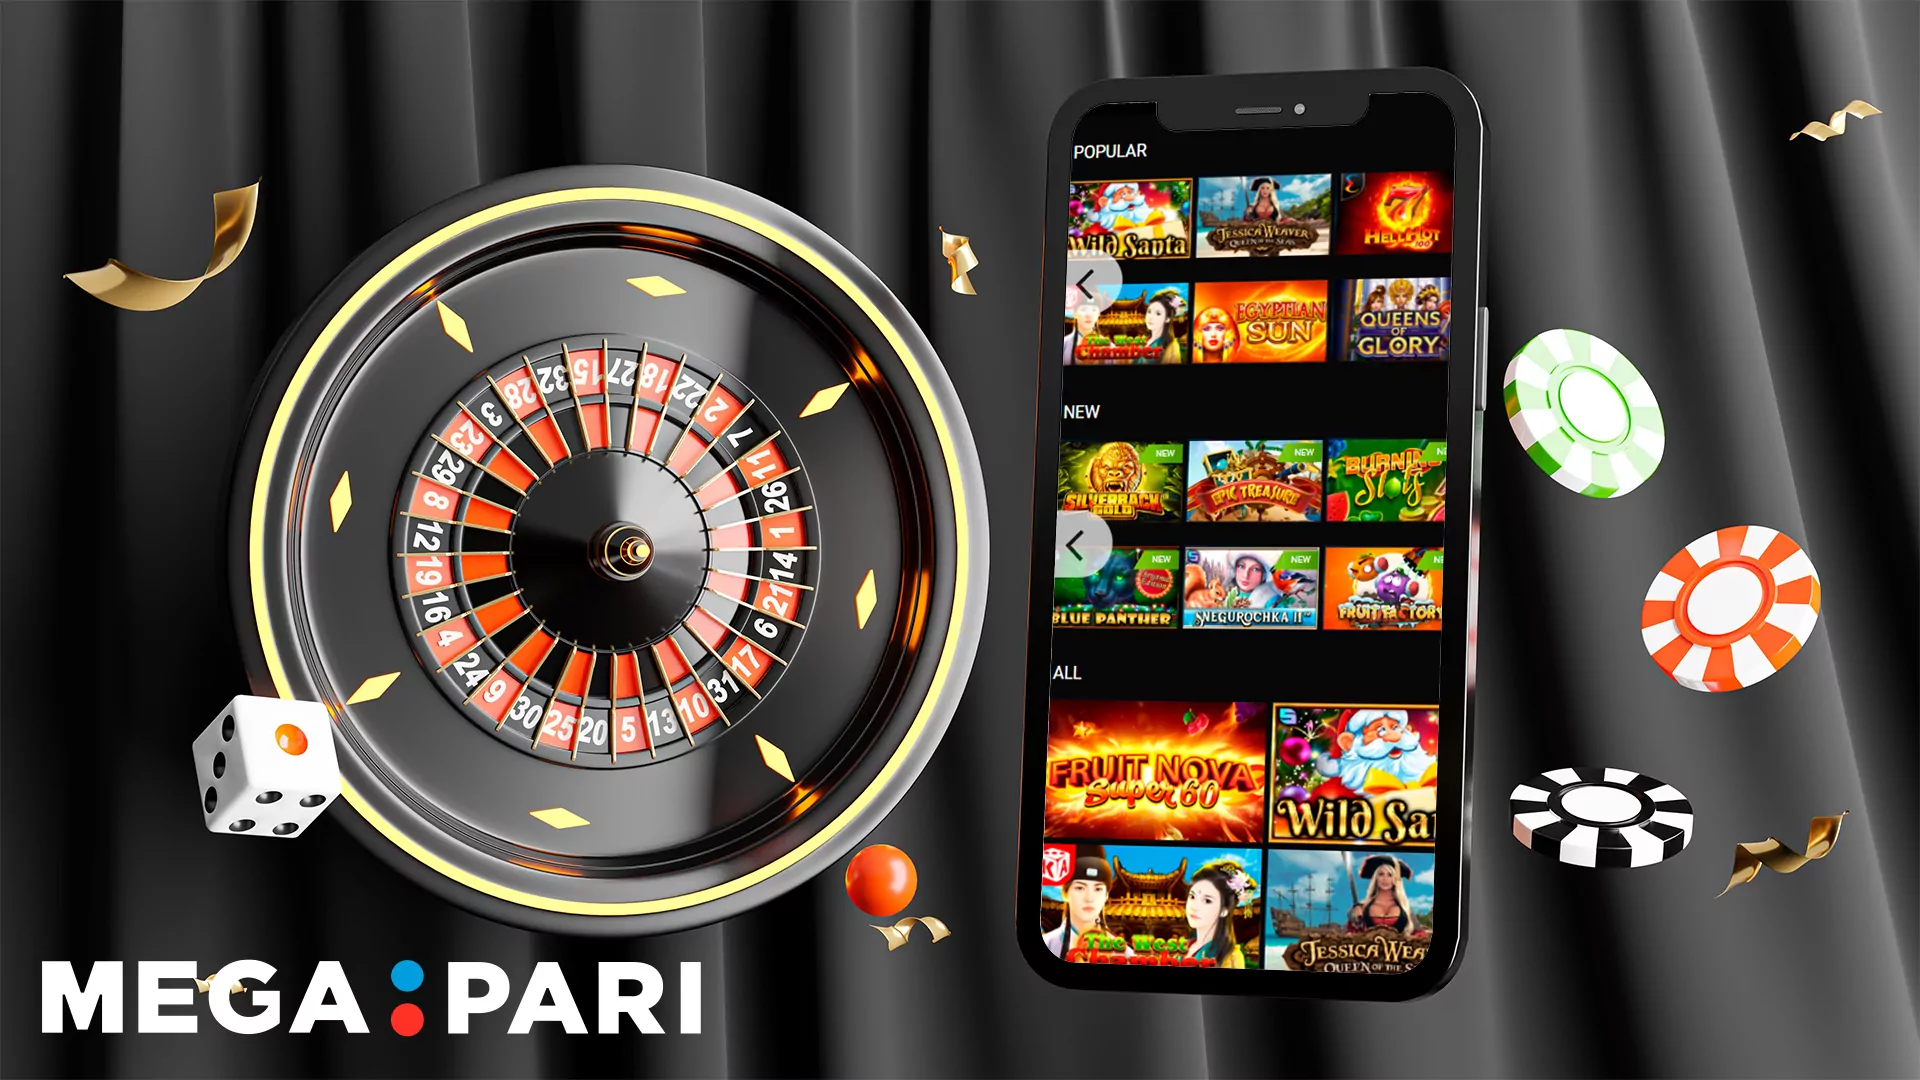 Use the Megapari app to bet on casino games.